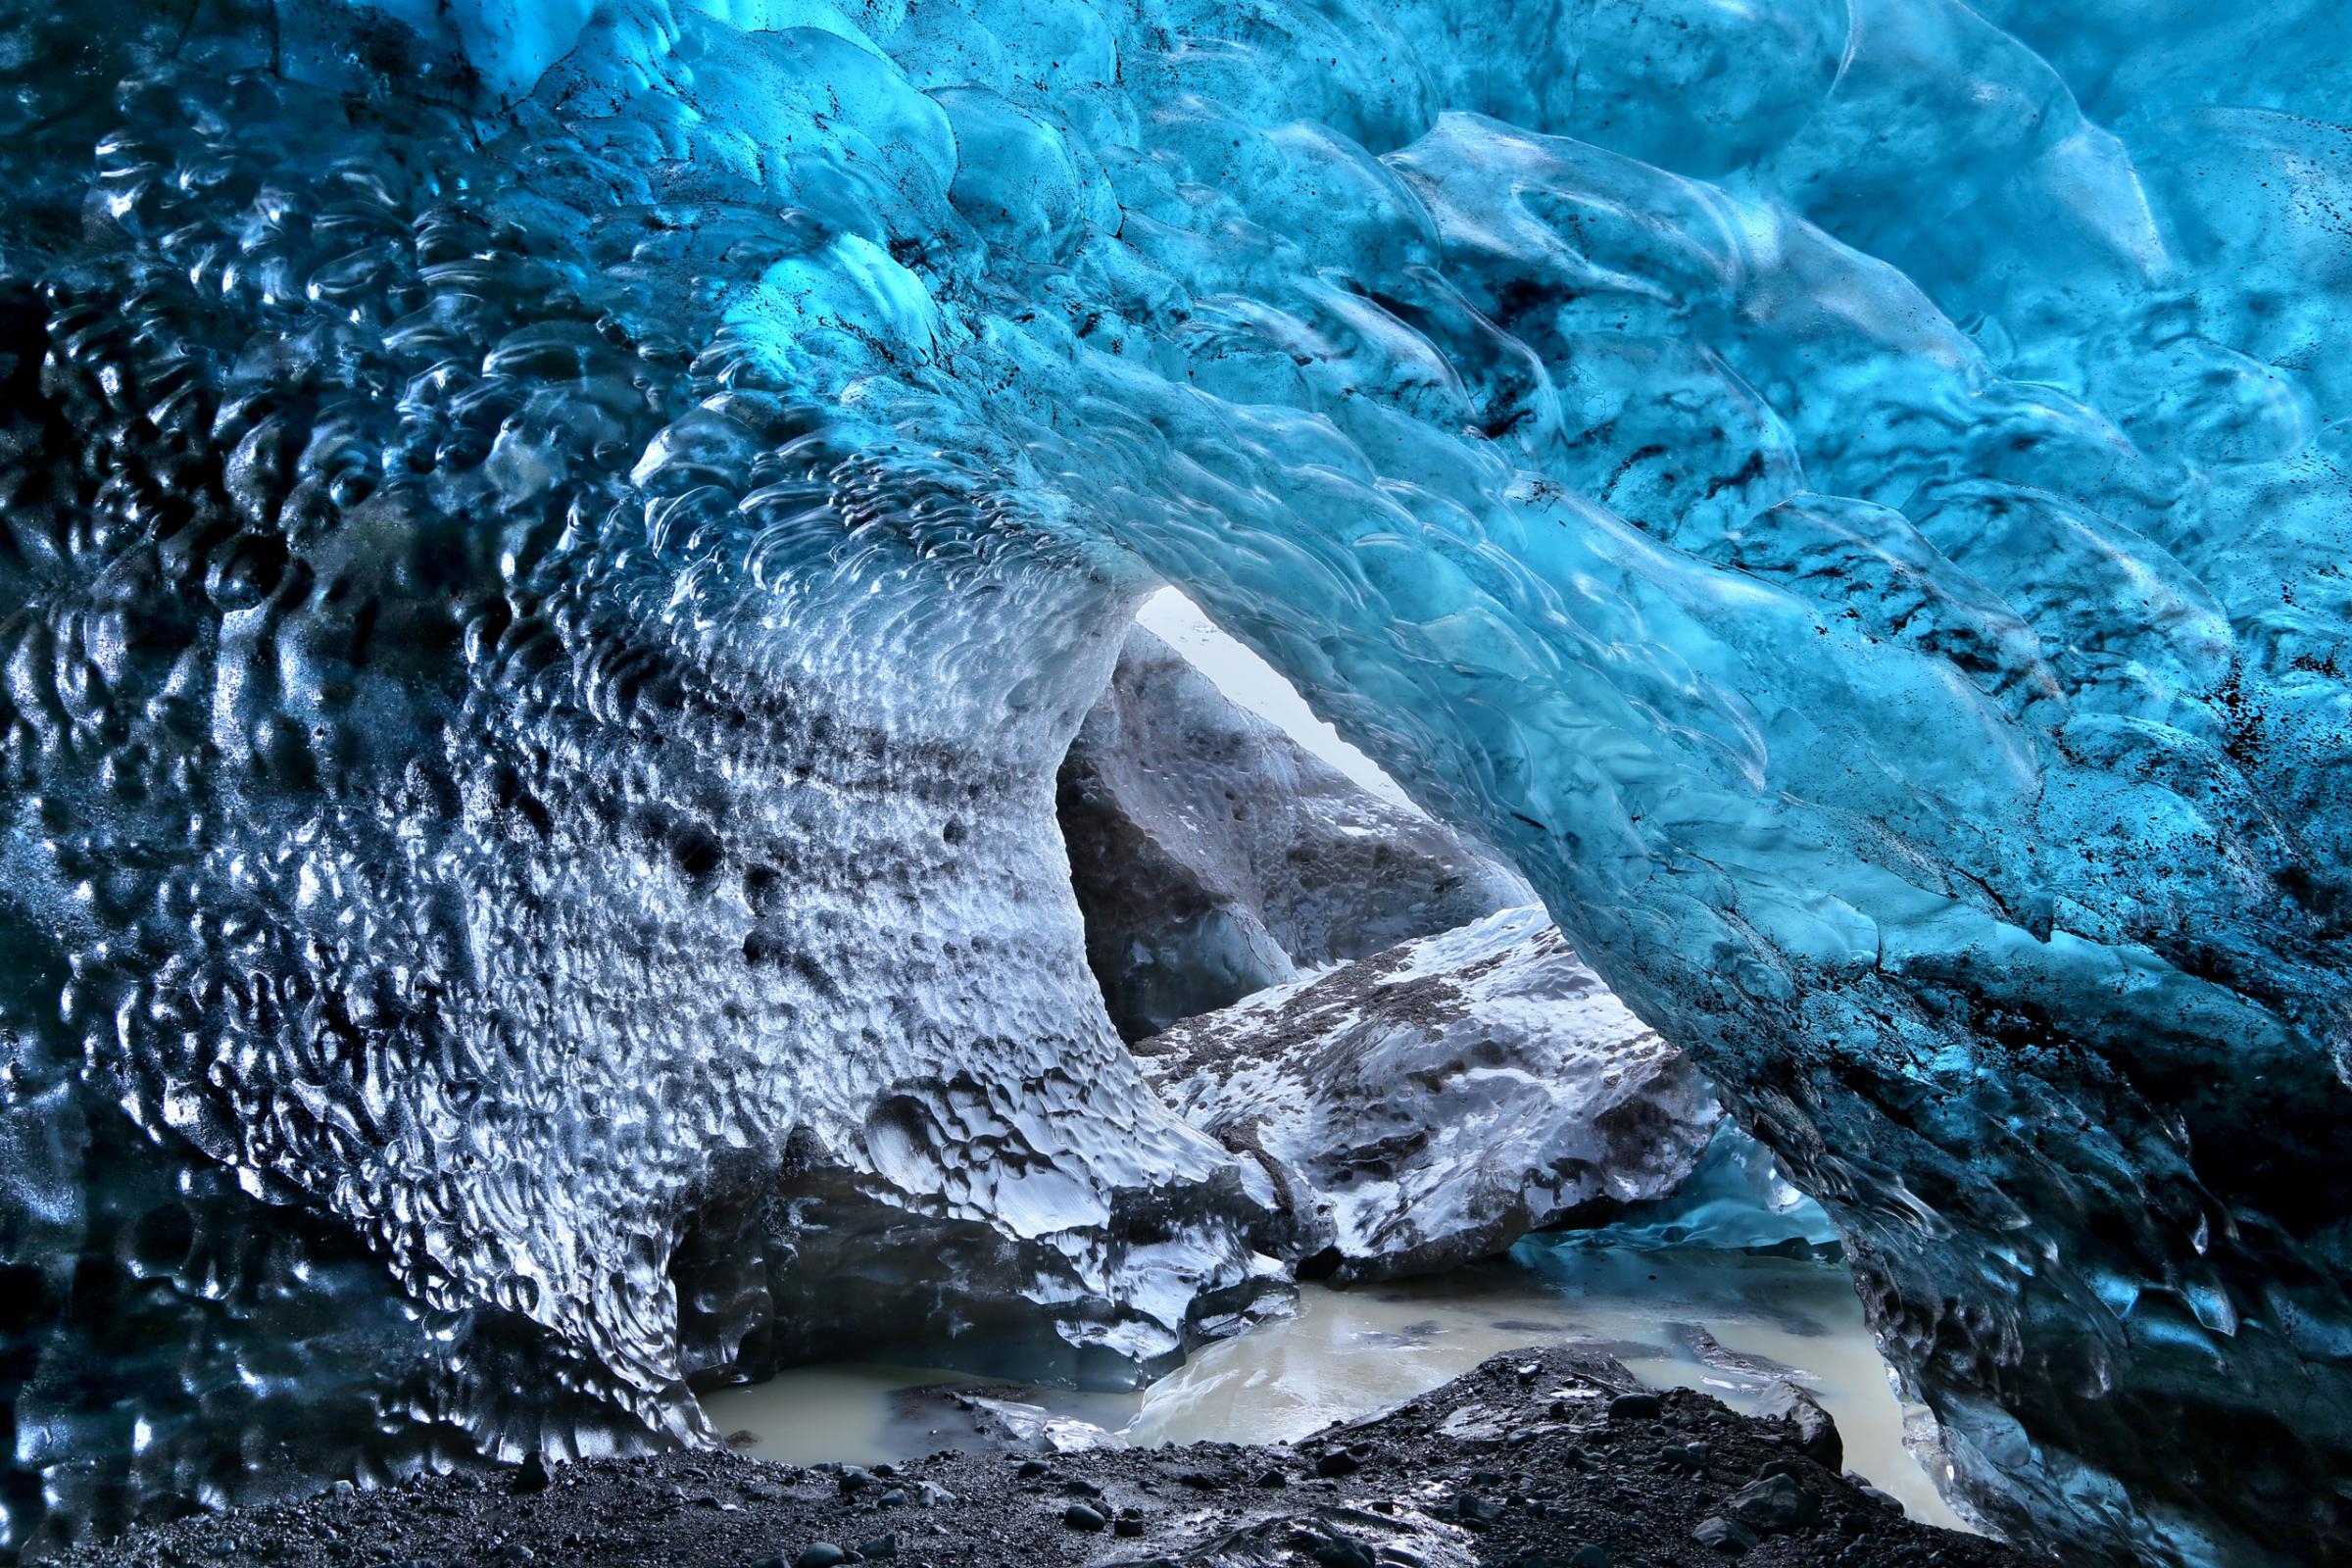 Svnafellsjkull glacier ice cave, Iceland